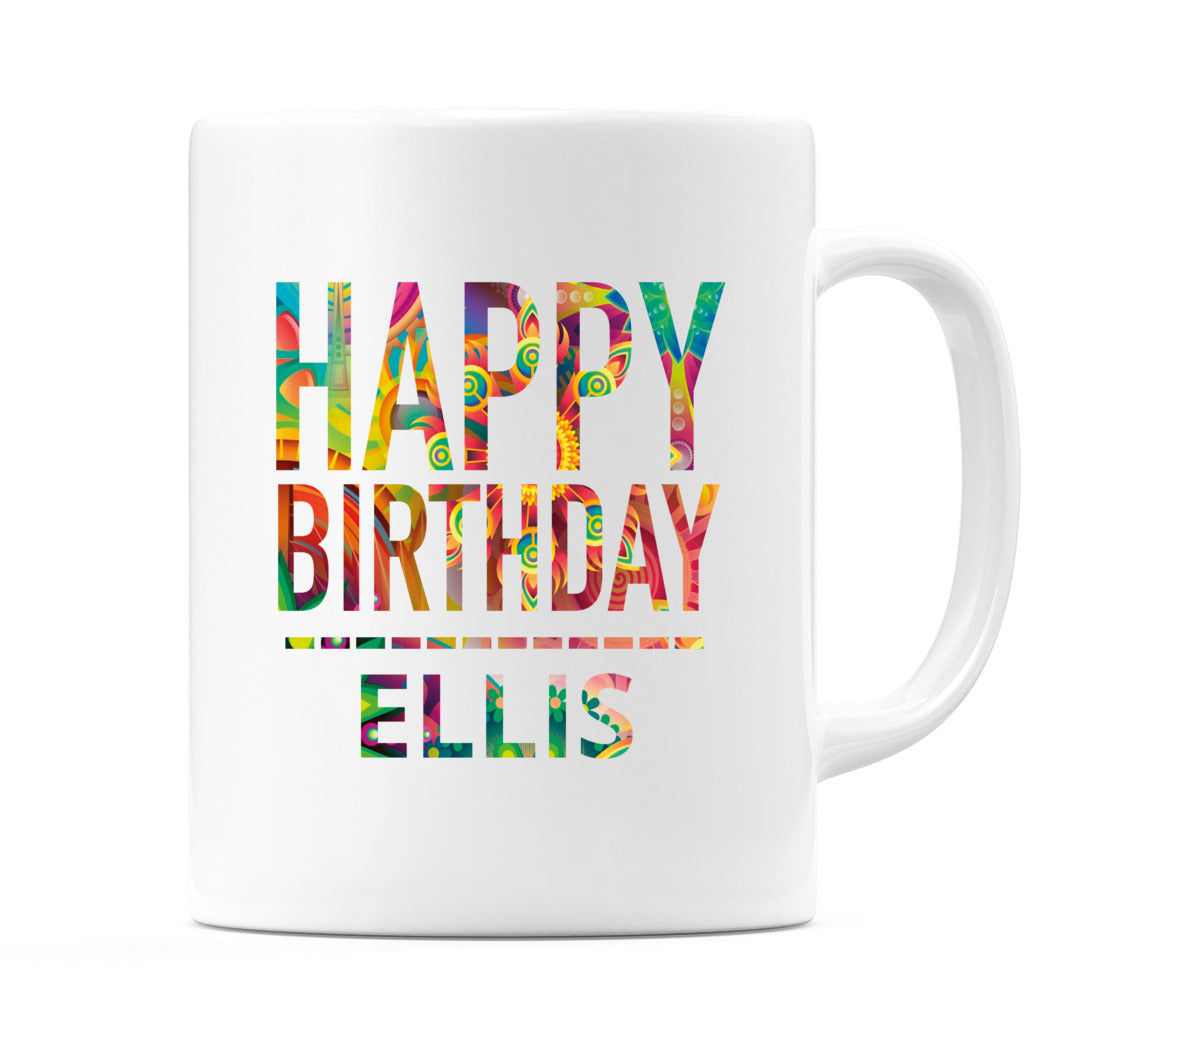 Happy Birthday Ellis (Tie Dye Effect) Mug Cup by WeDoMugs